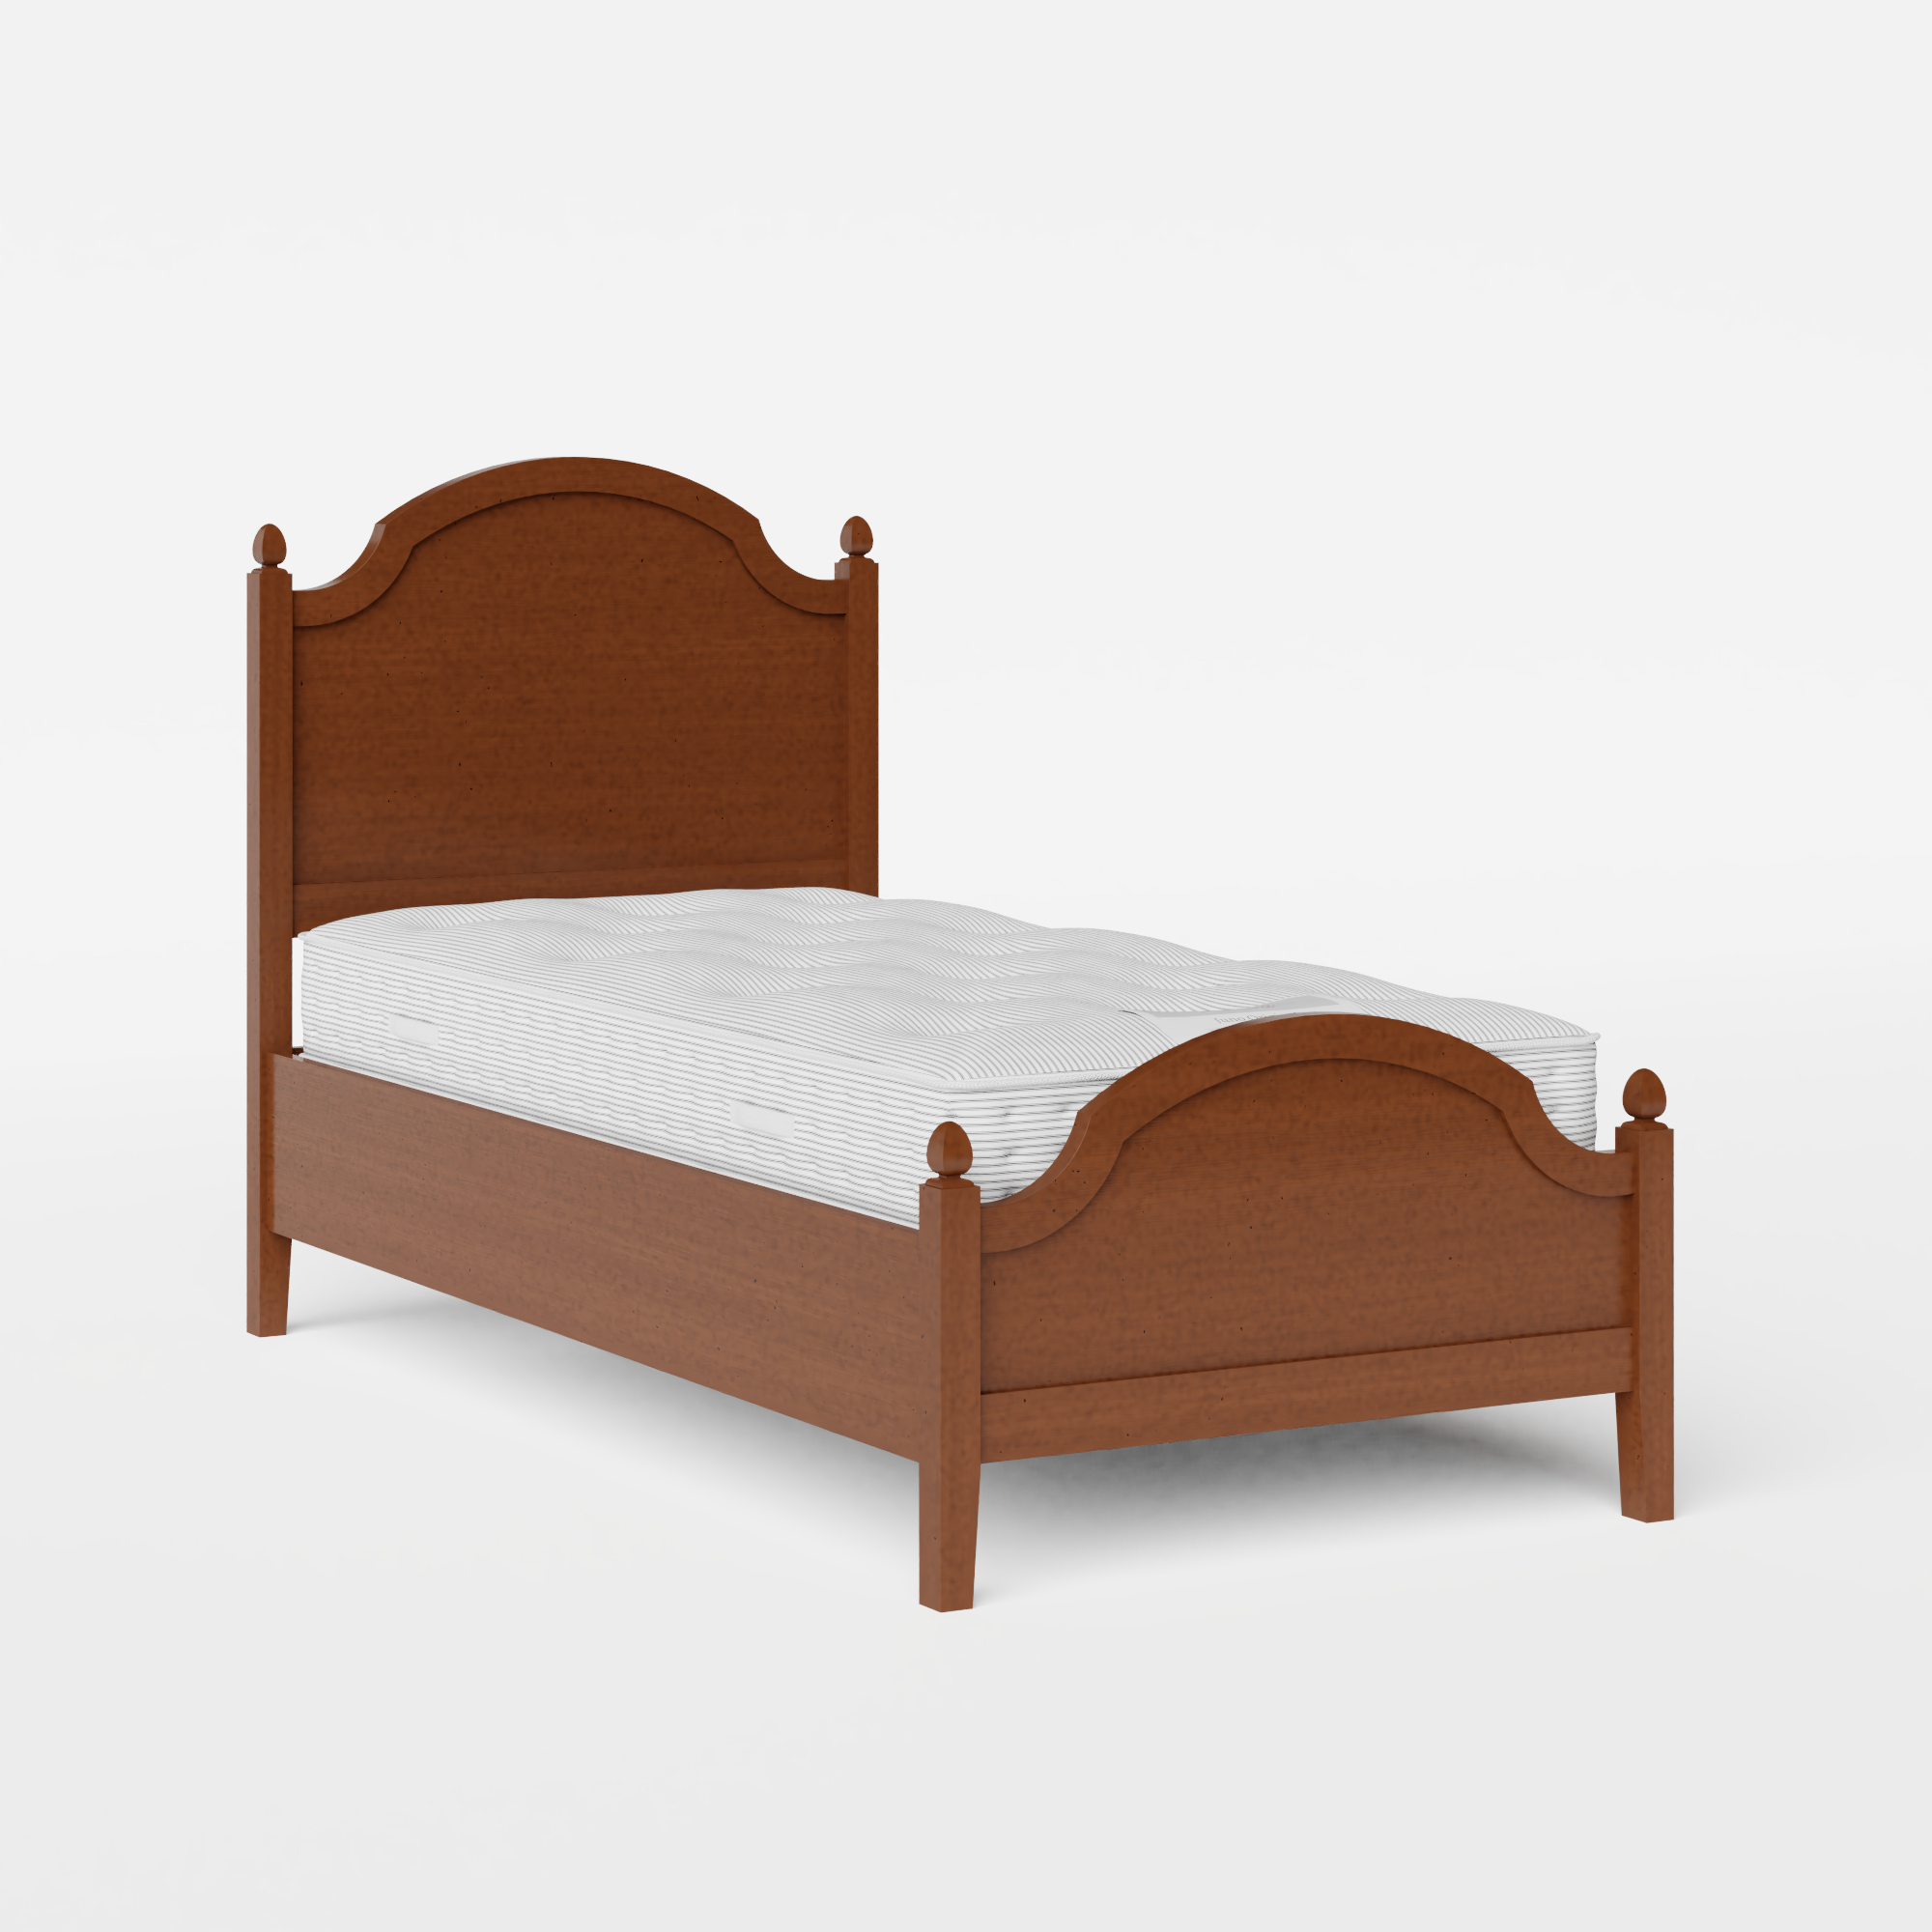 Kipling Low Footend single wood bed in dark cherry with Juno mattress